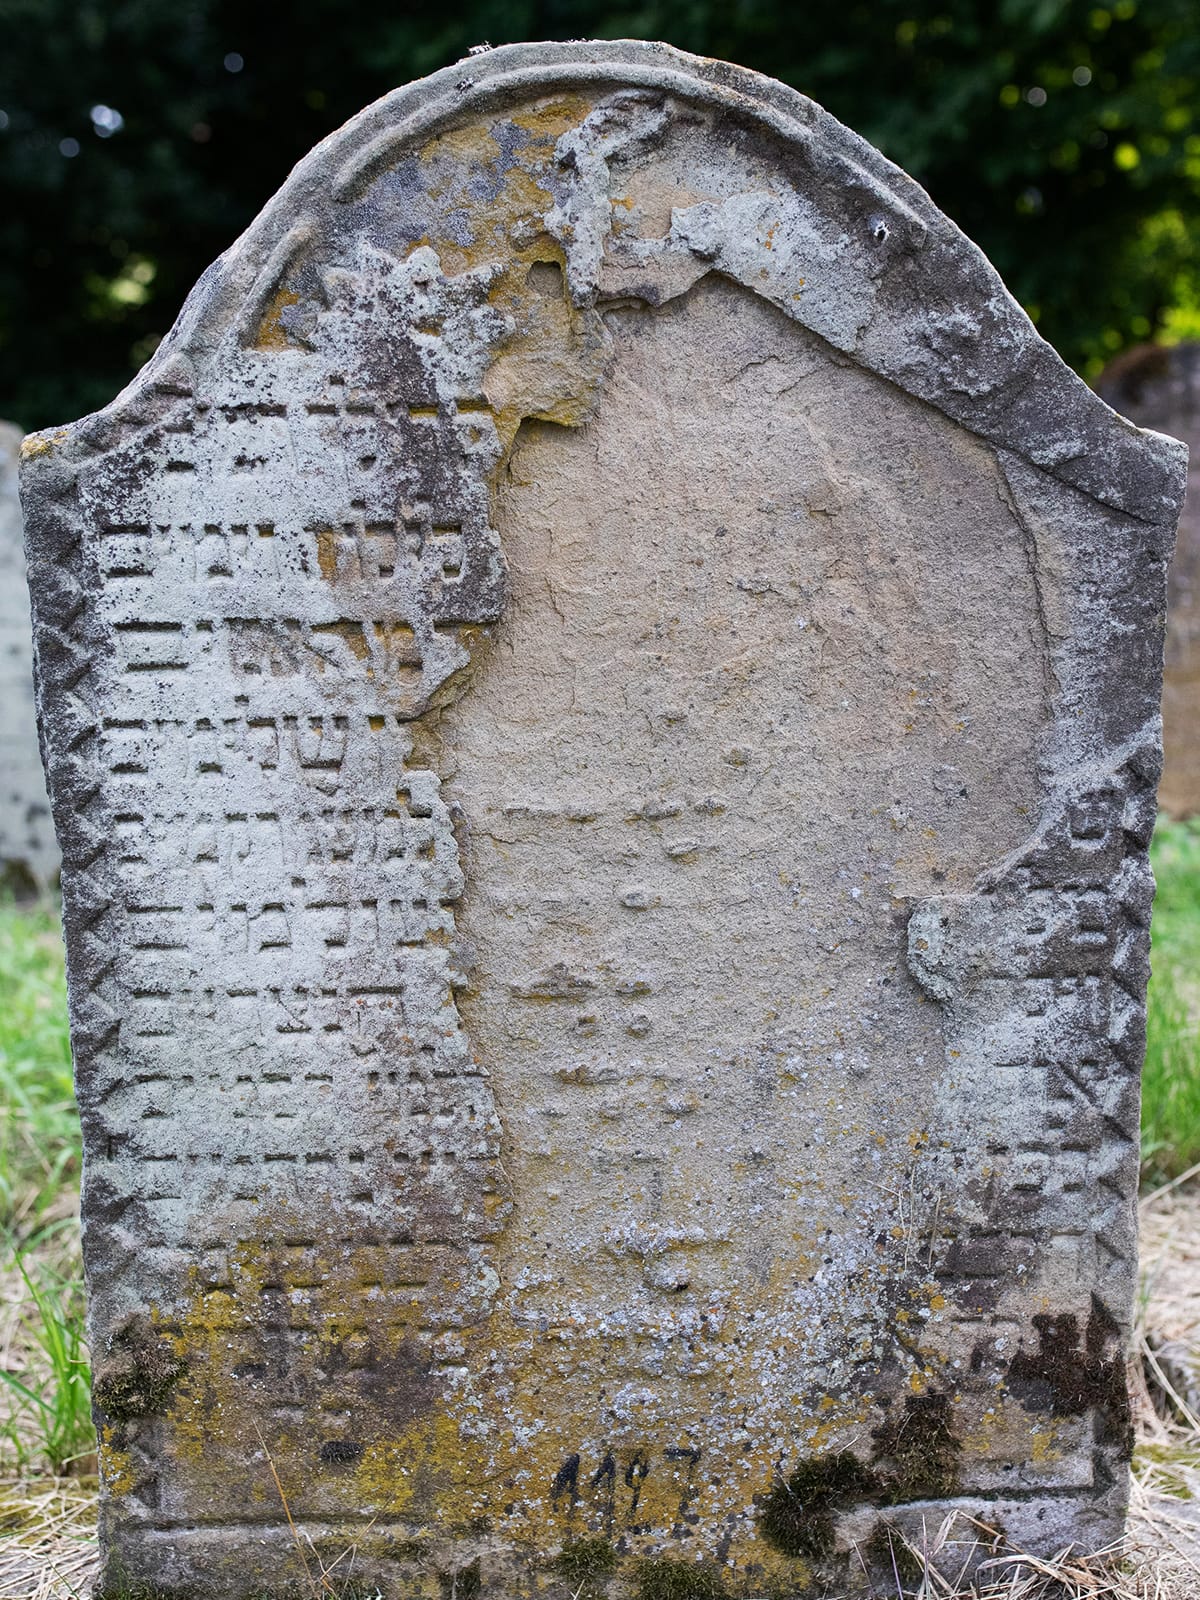 Grave 1126